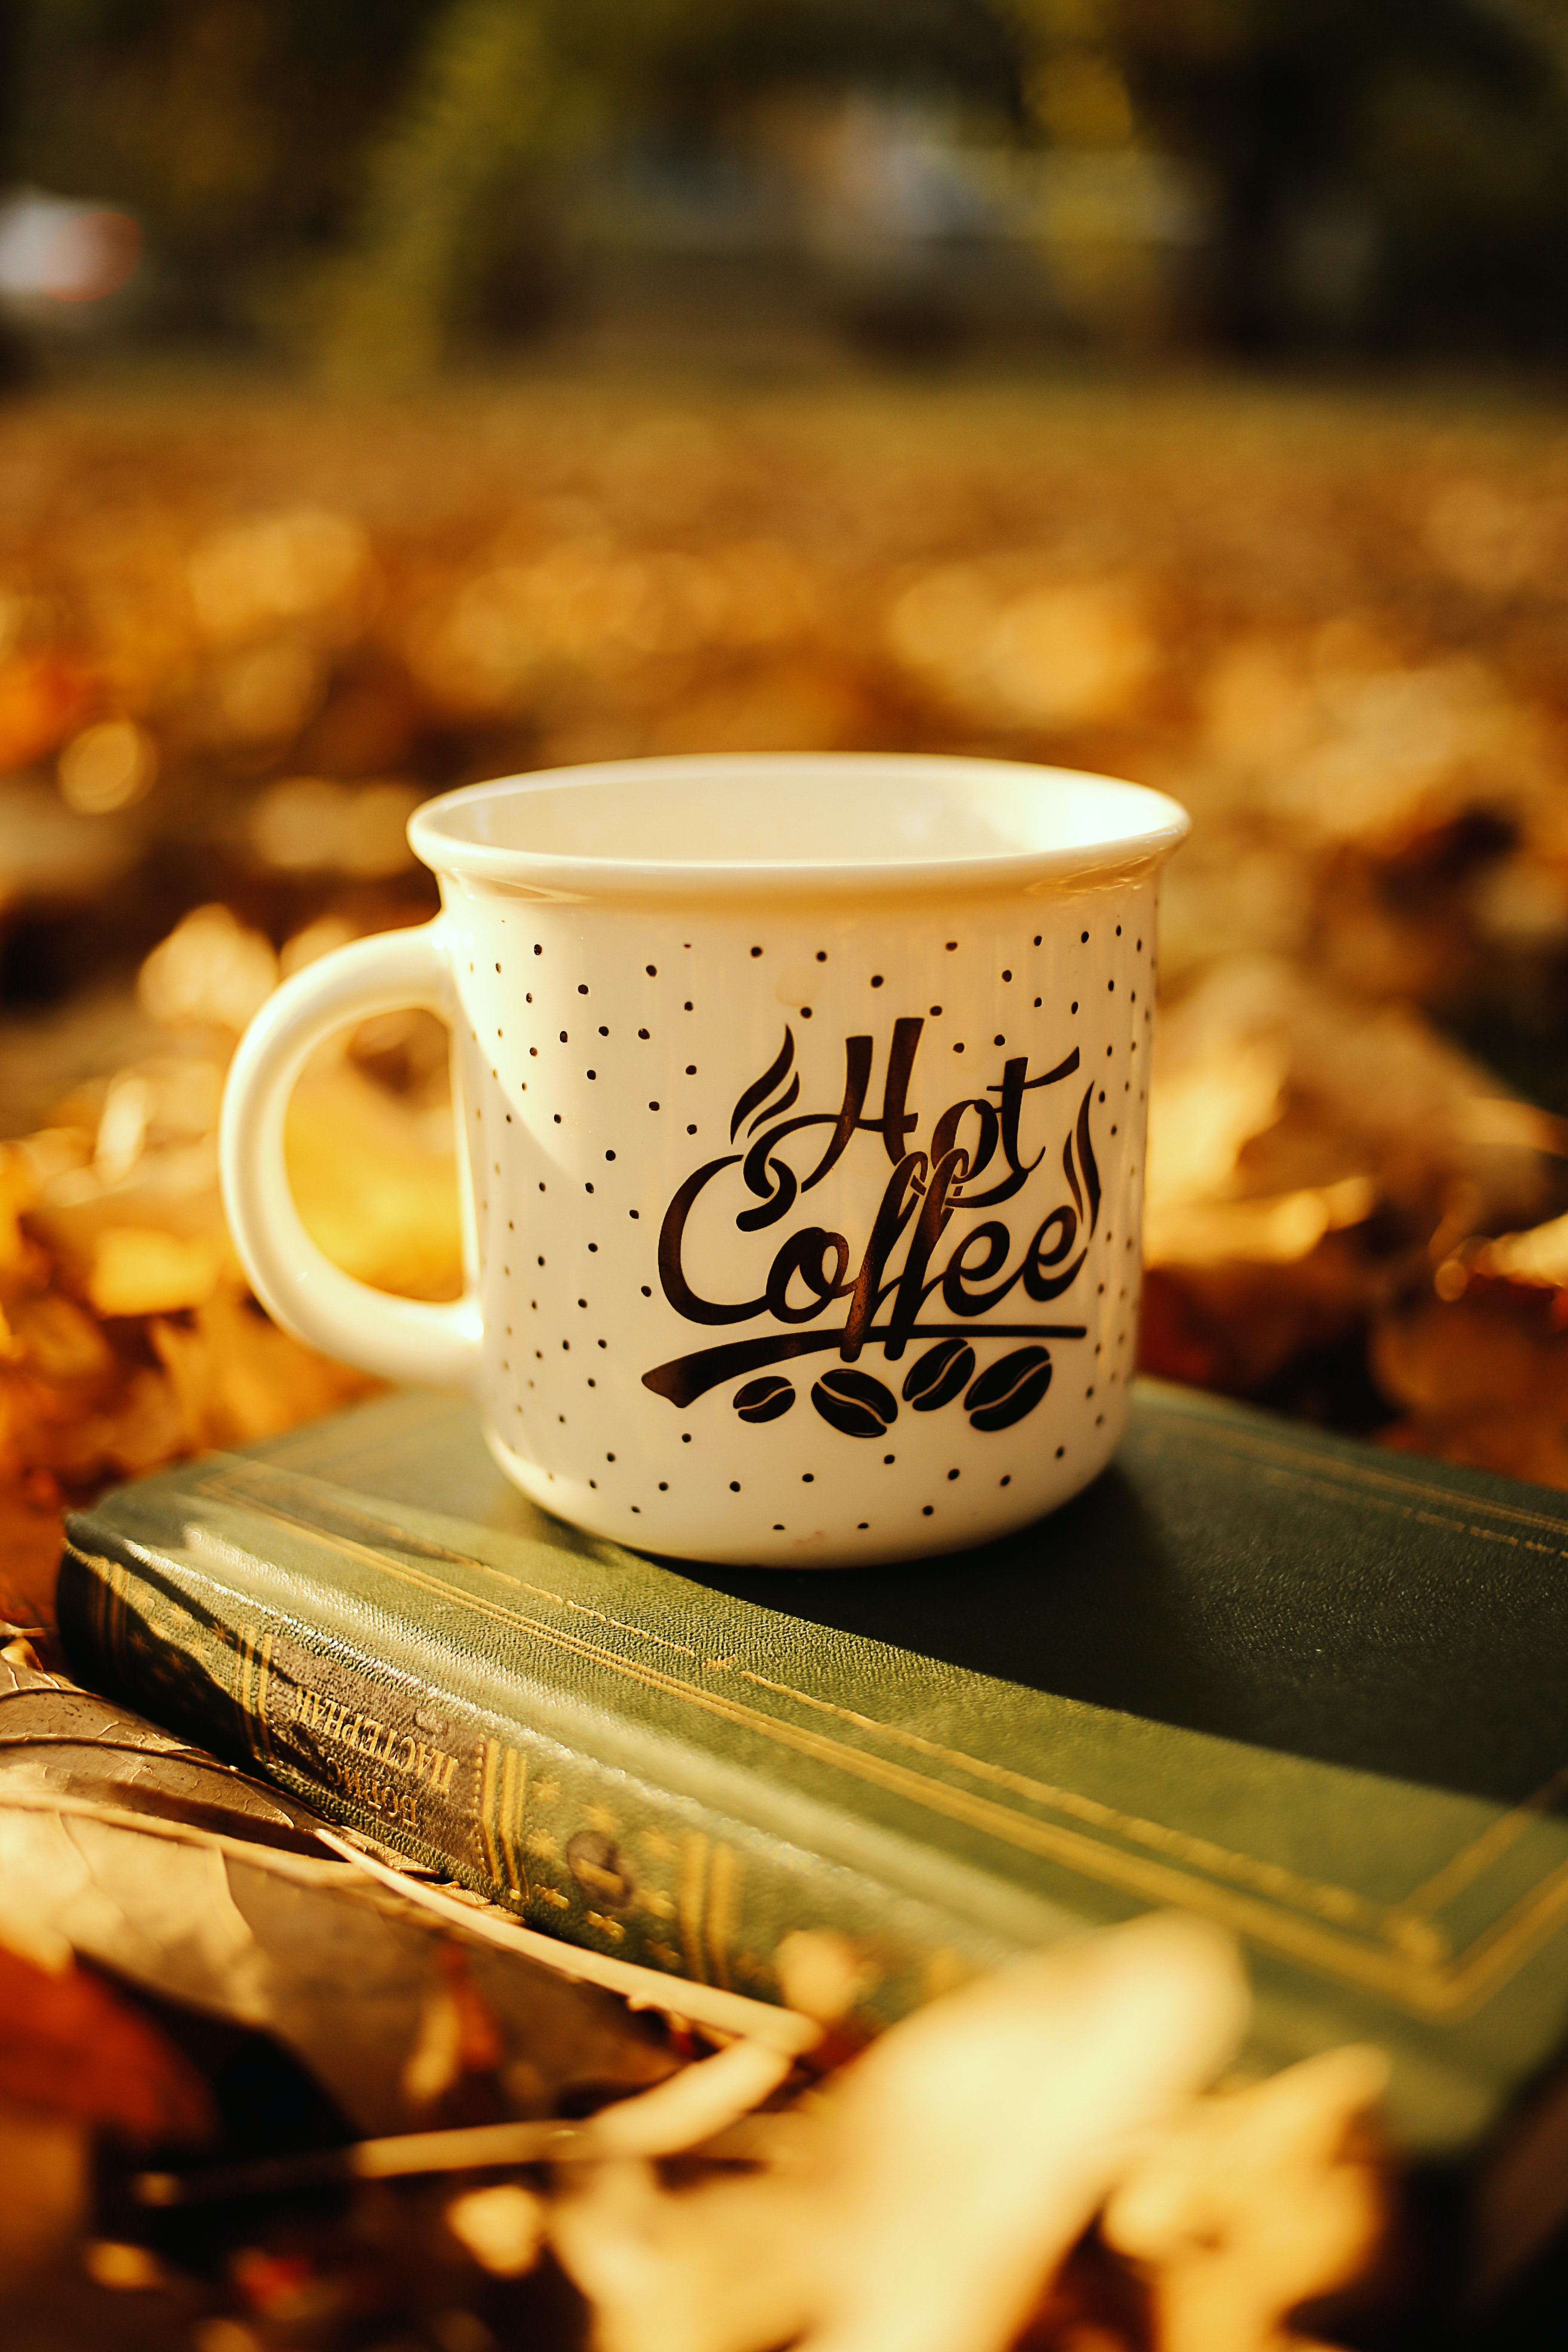 mug, book, coffee, words, cup, inscription